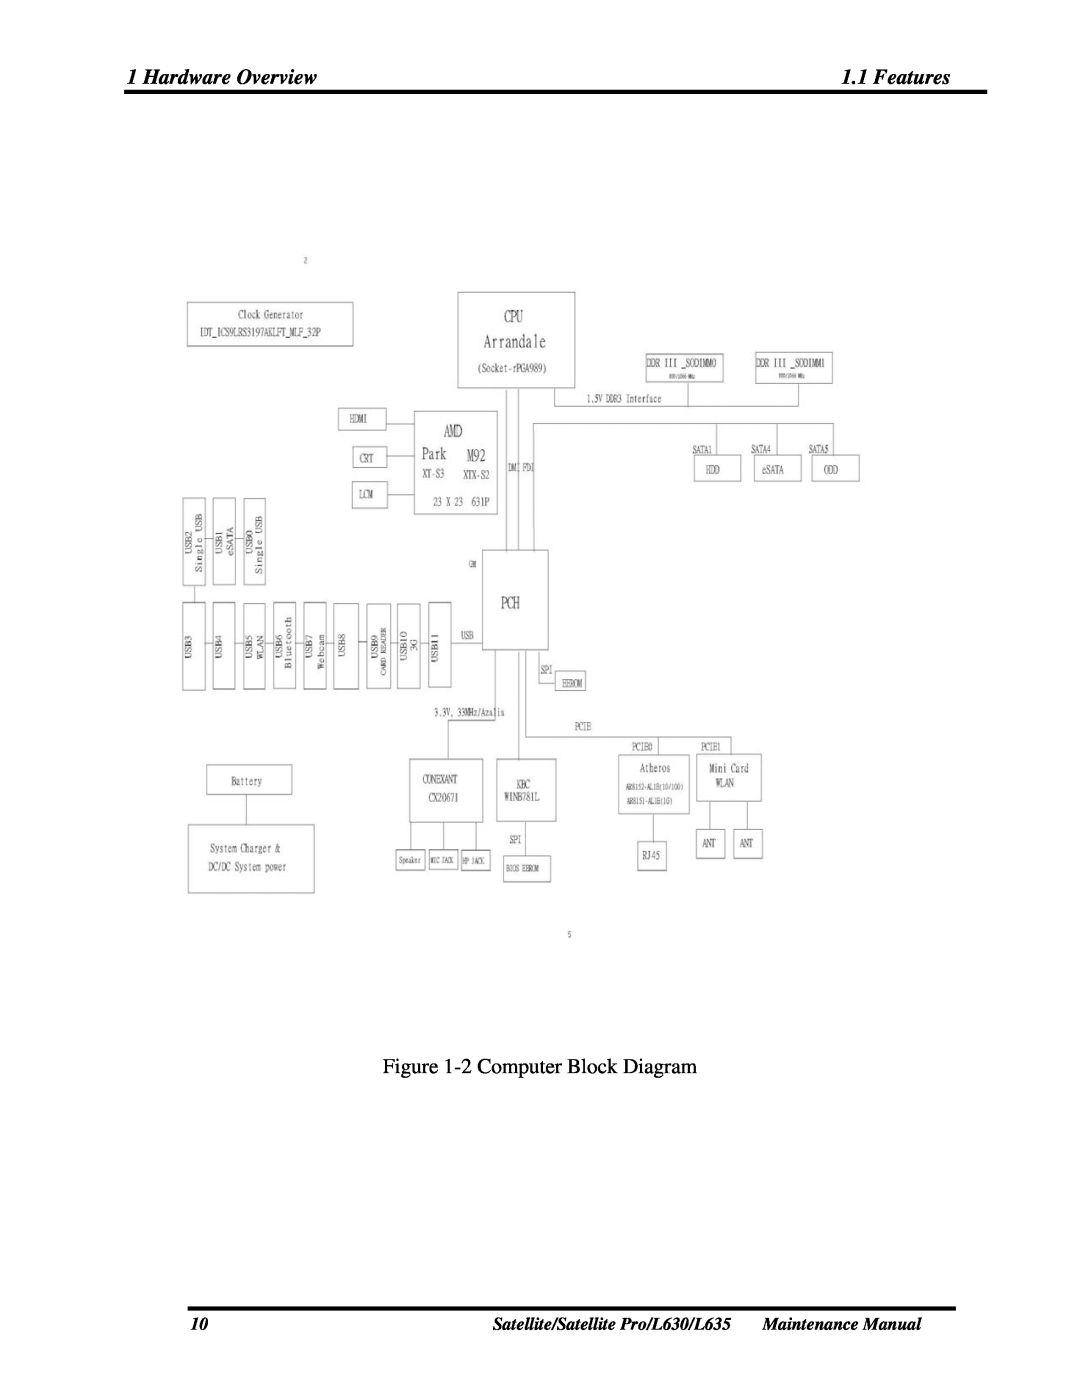 Toshiba Hardware Overview, Features, 2 Computer Block Diagram, Satellite/Satellite Pro/L630/L635, Maintenance Manual 